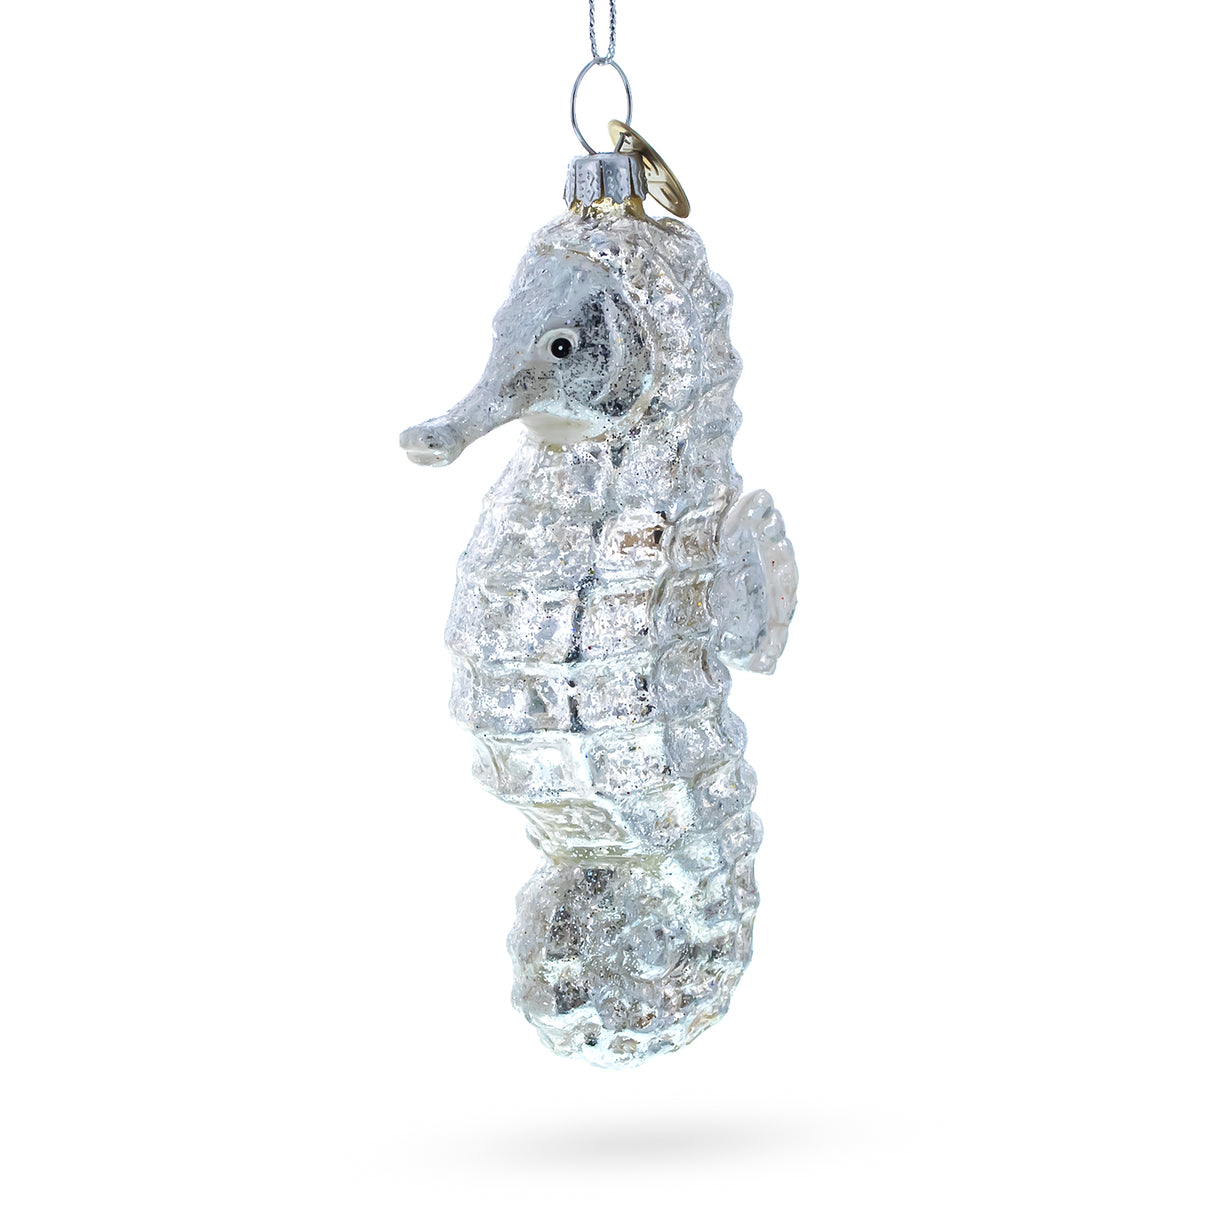 Glass Elegant Silver Sea Horse - Blown Glass Christmas Ornament in Silver color